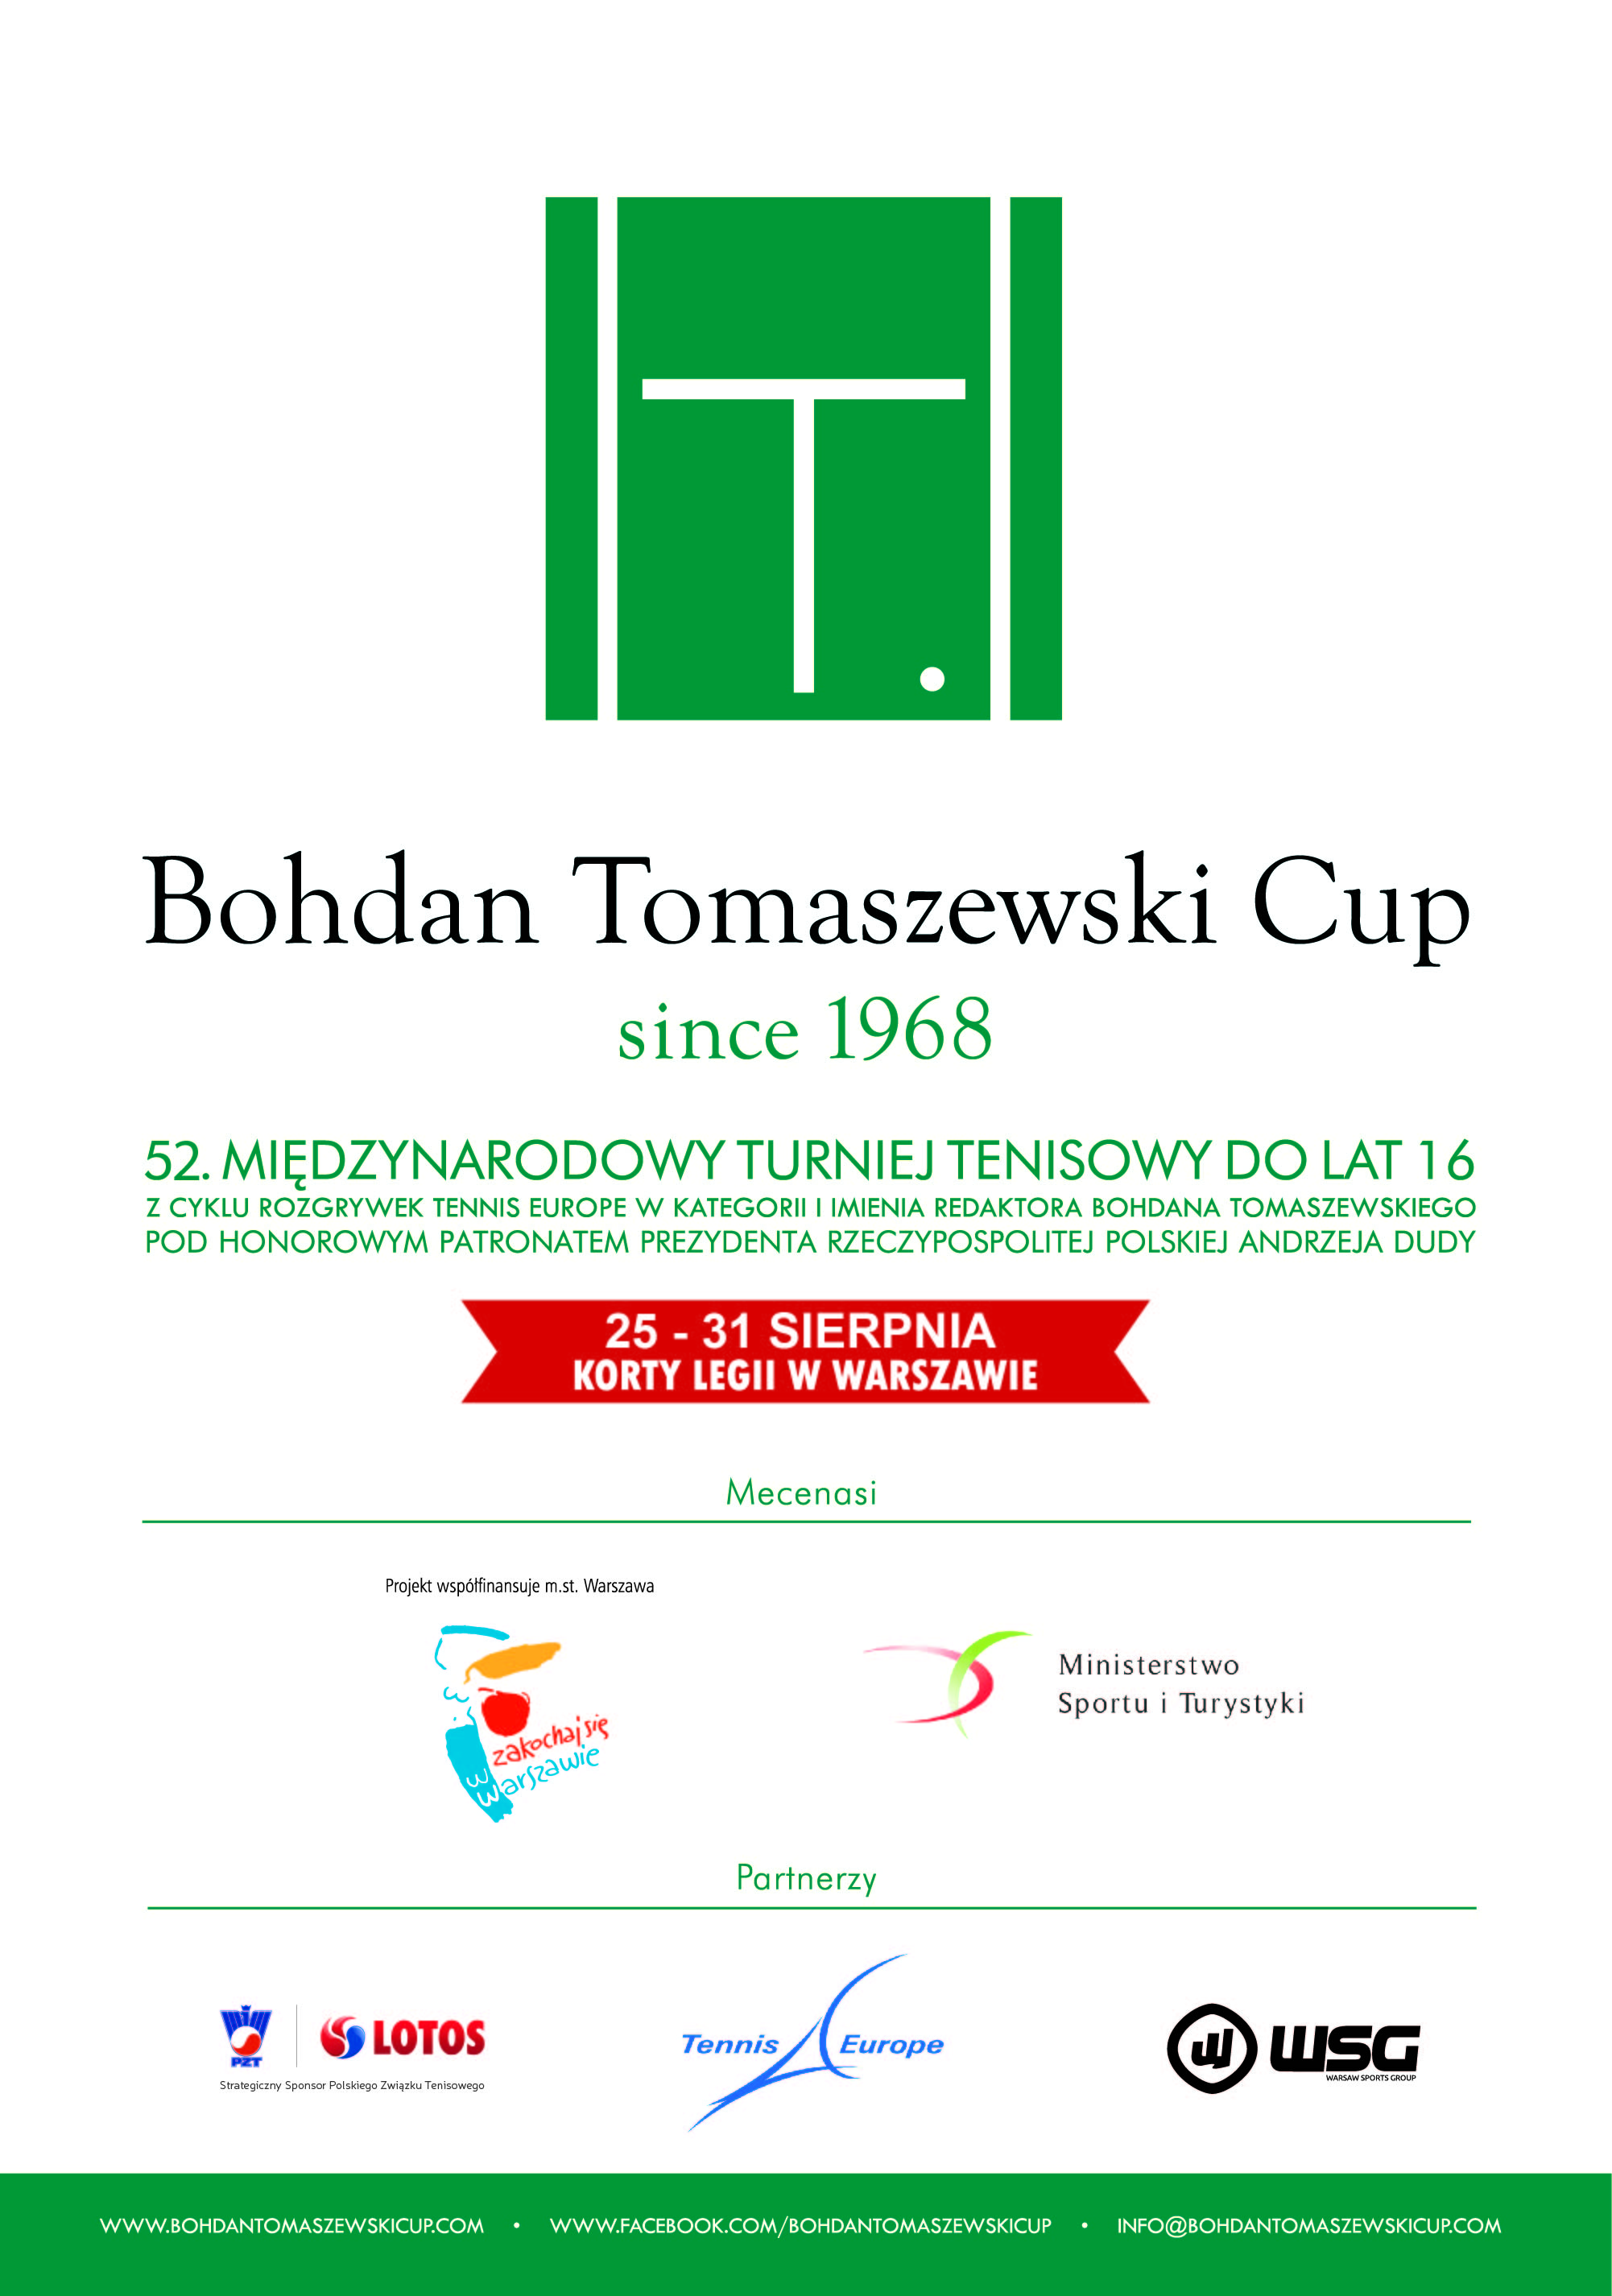 Bohdan Tomaszewski Cup